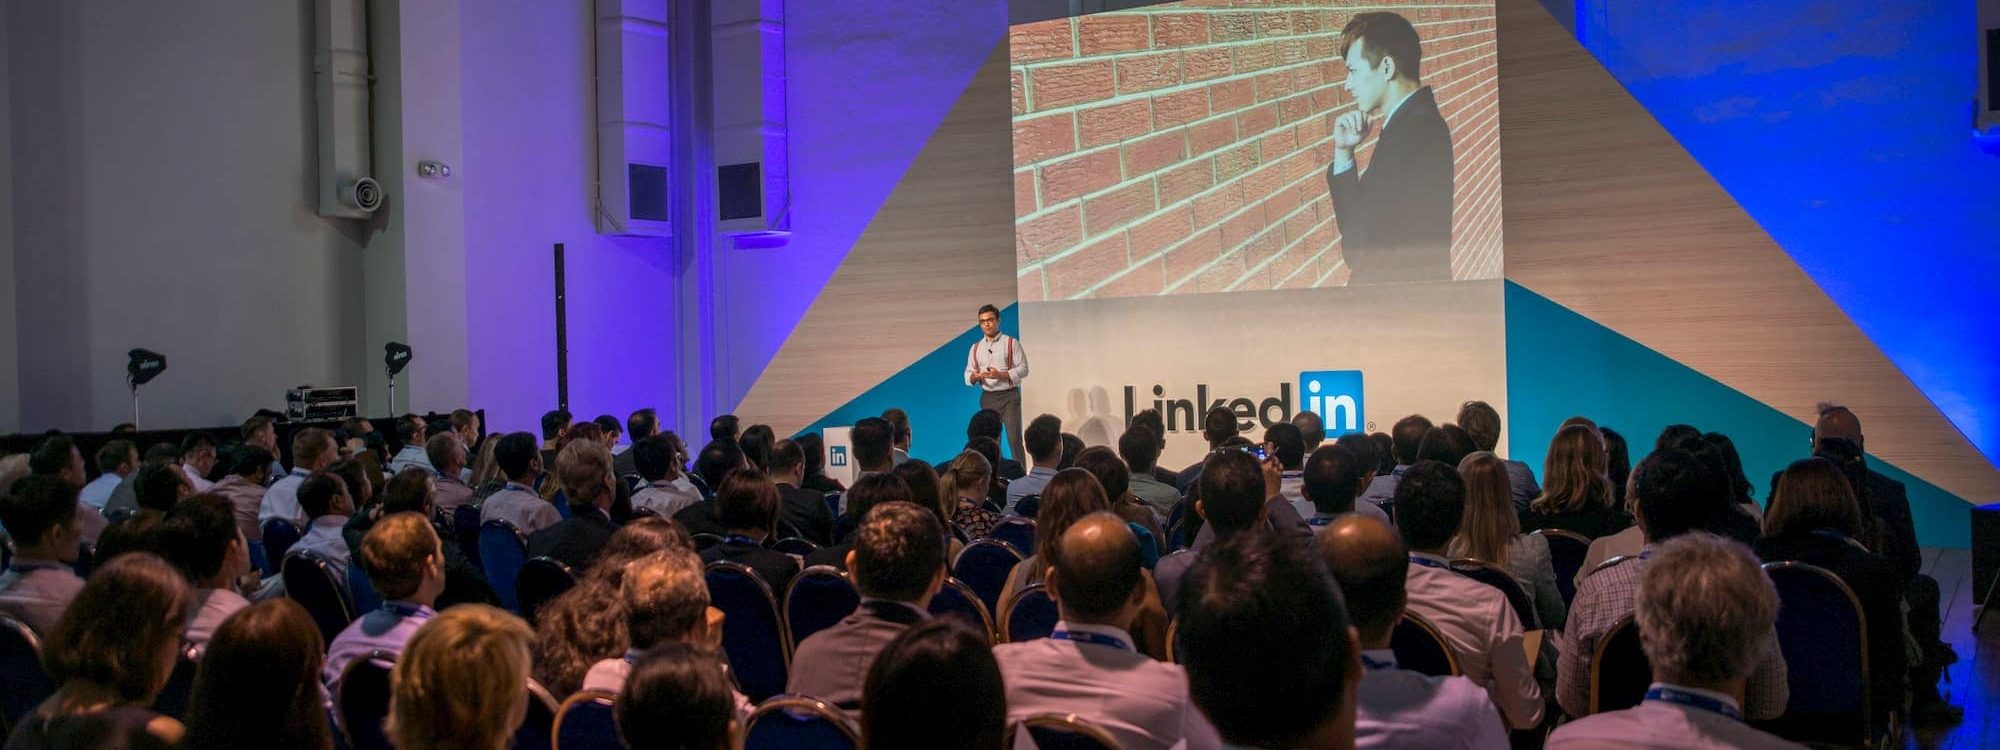 LinkedIn event in Singapore